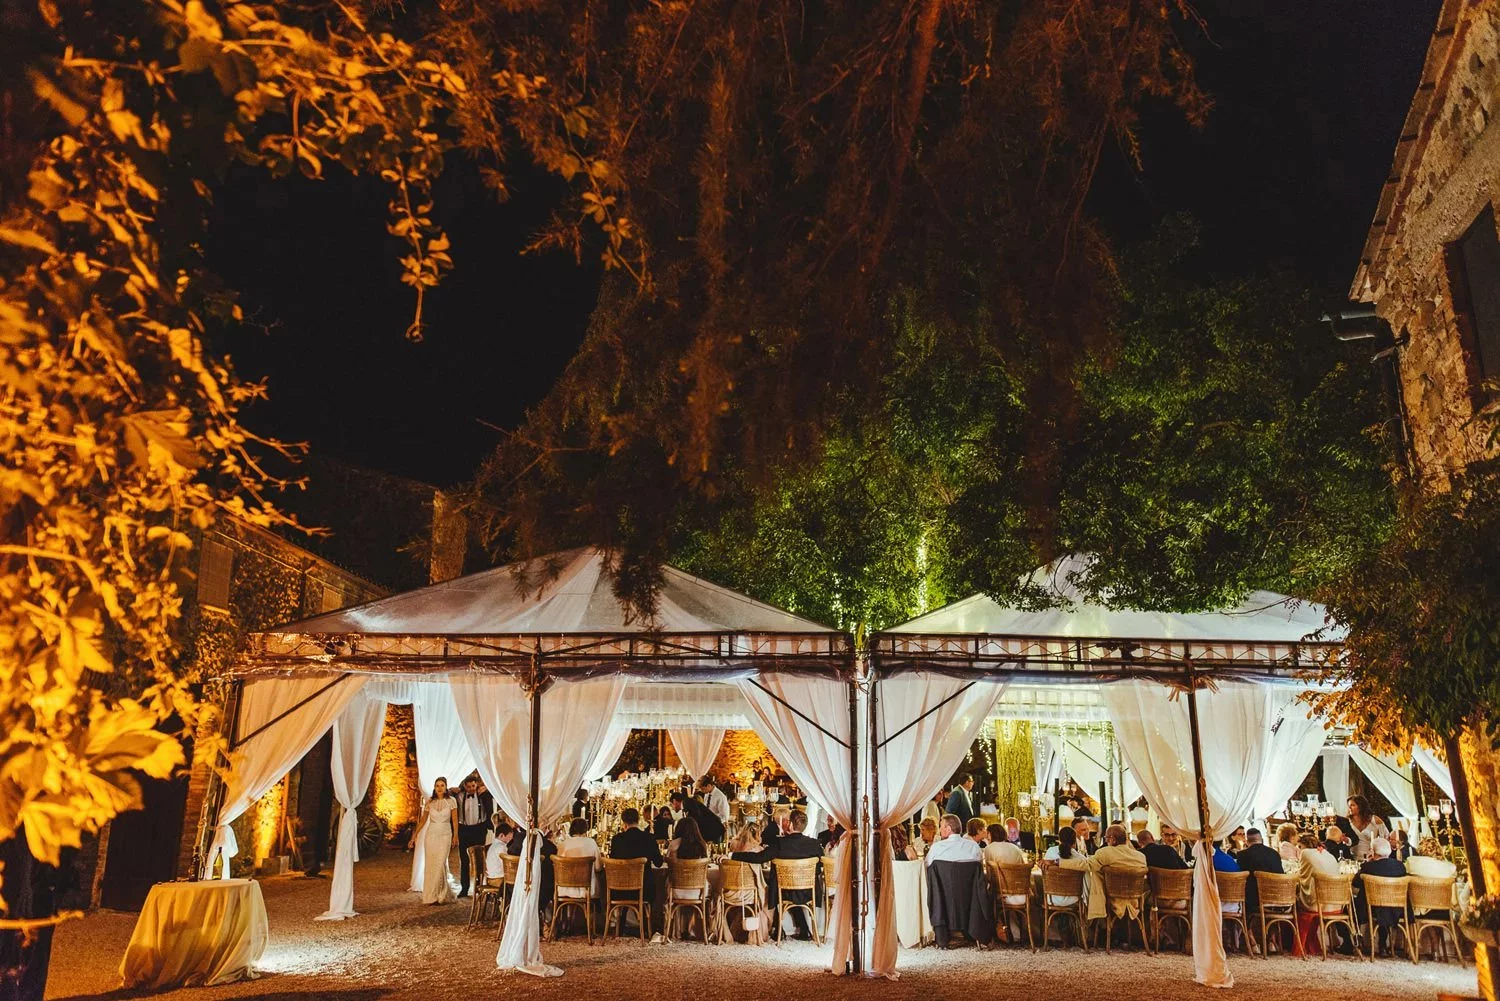 An outdoor wedding reception under decorated gazebos at Borgo Di Castelvecchio in Tuscany, Italy.